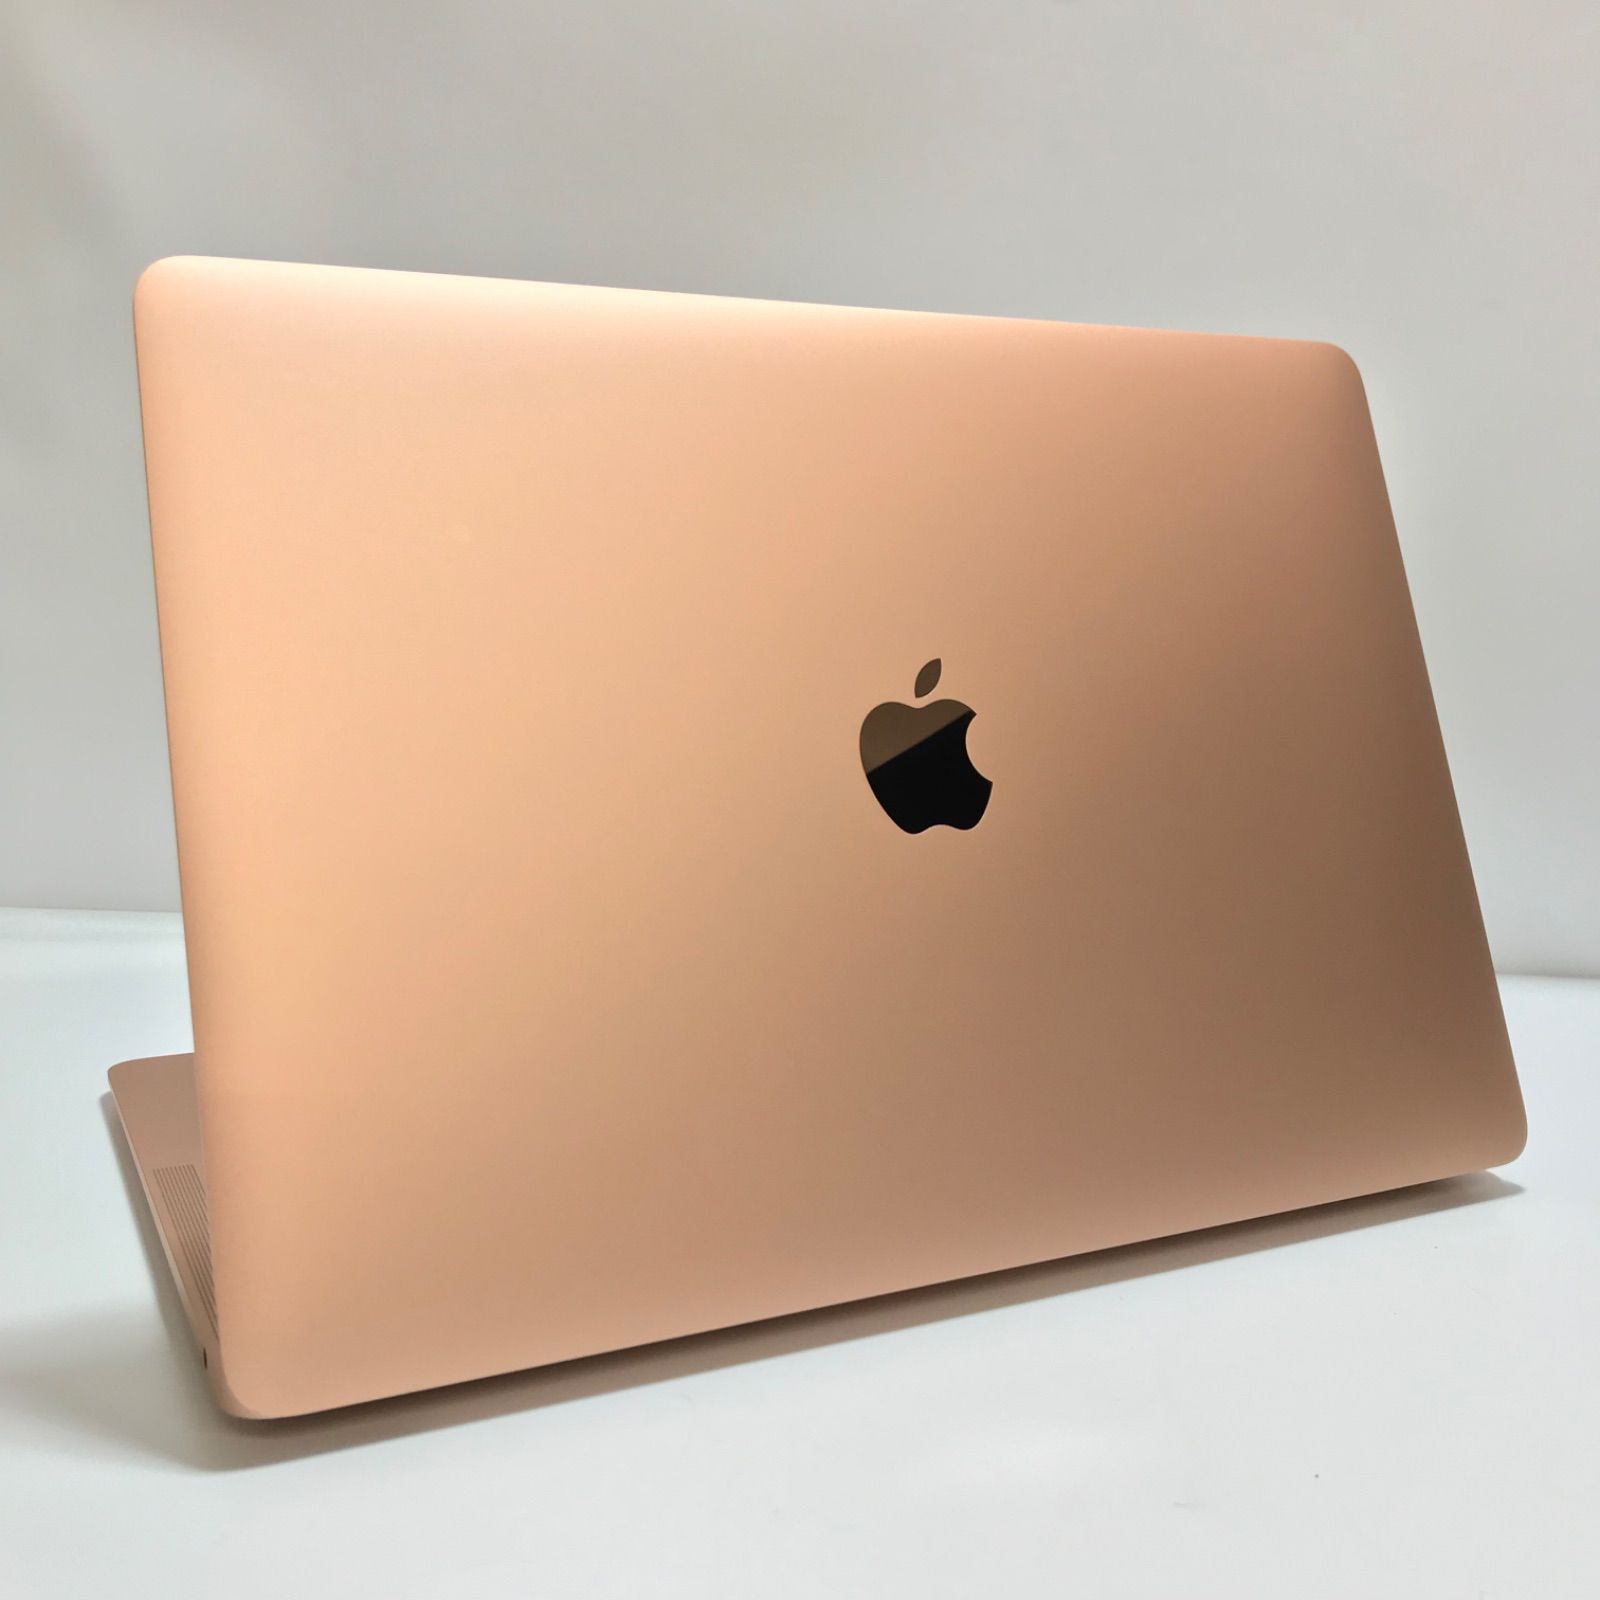 ■Apple MacBook Air 13-inch 2019 SSD256GB intel Core i5 中古 A1932 ゴールド 13インチ